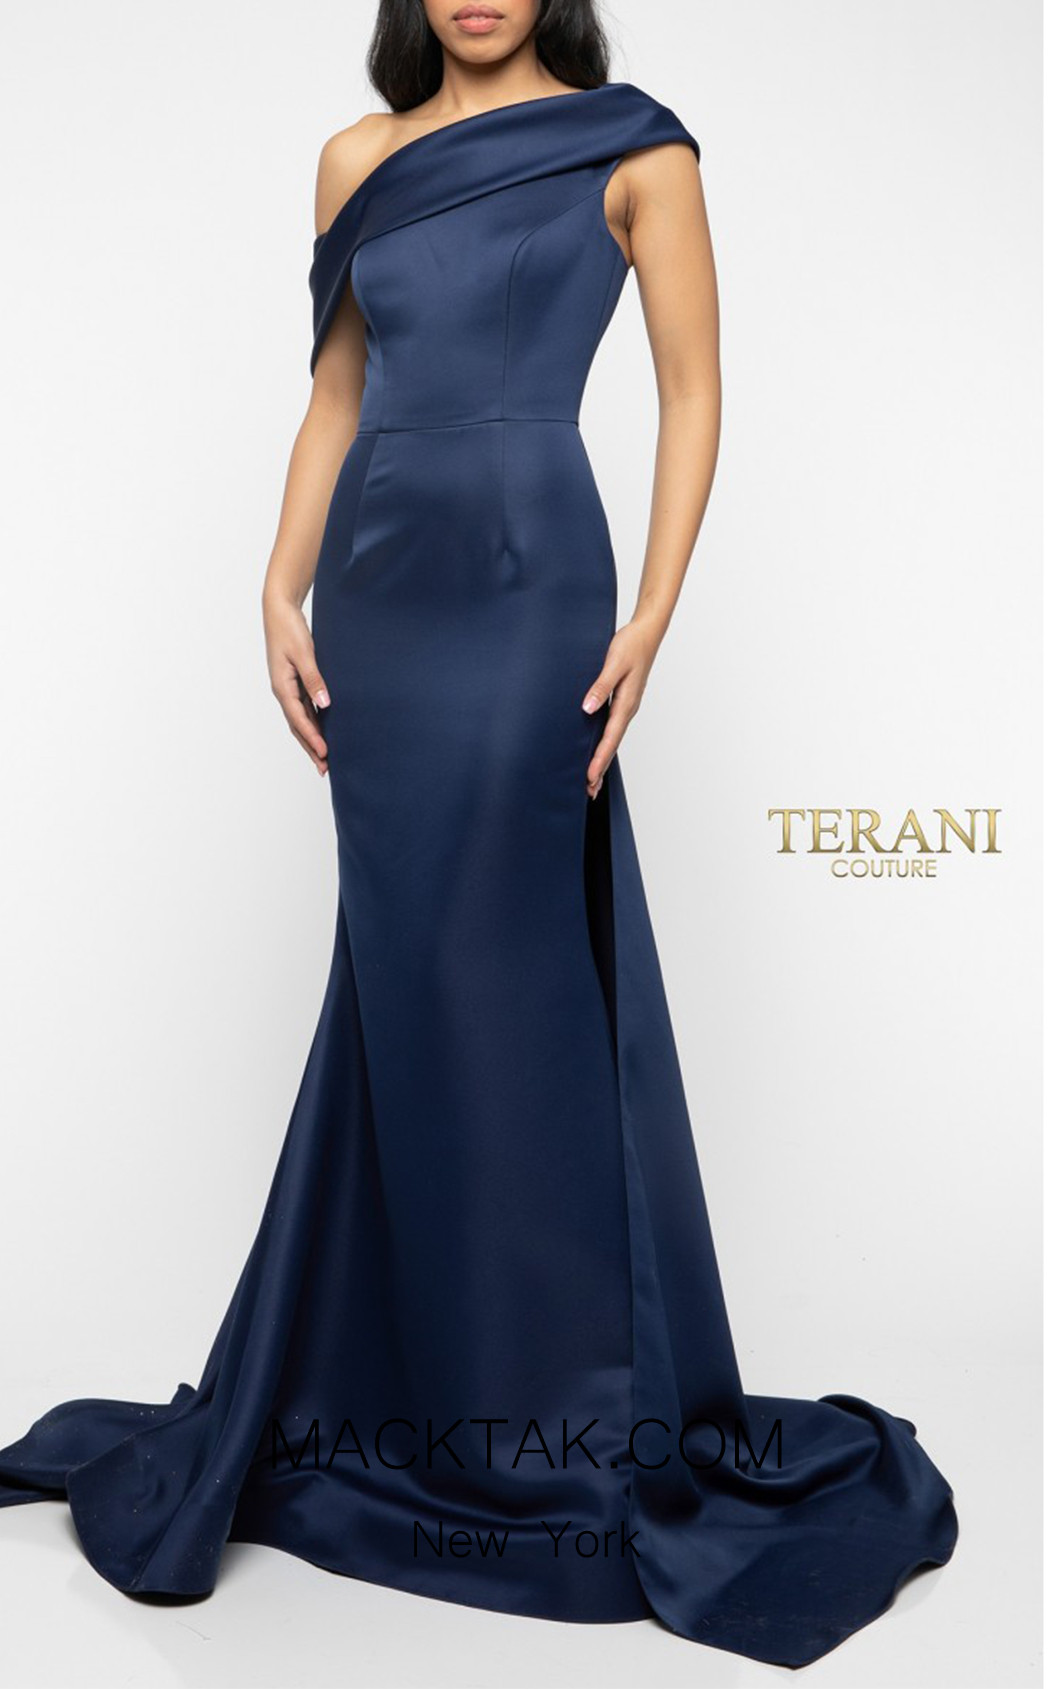 Terani couture 1921E0098 Front Dress